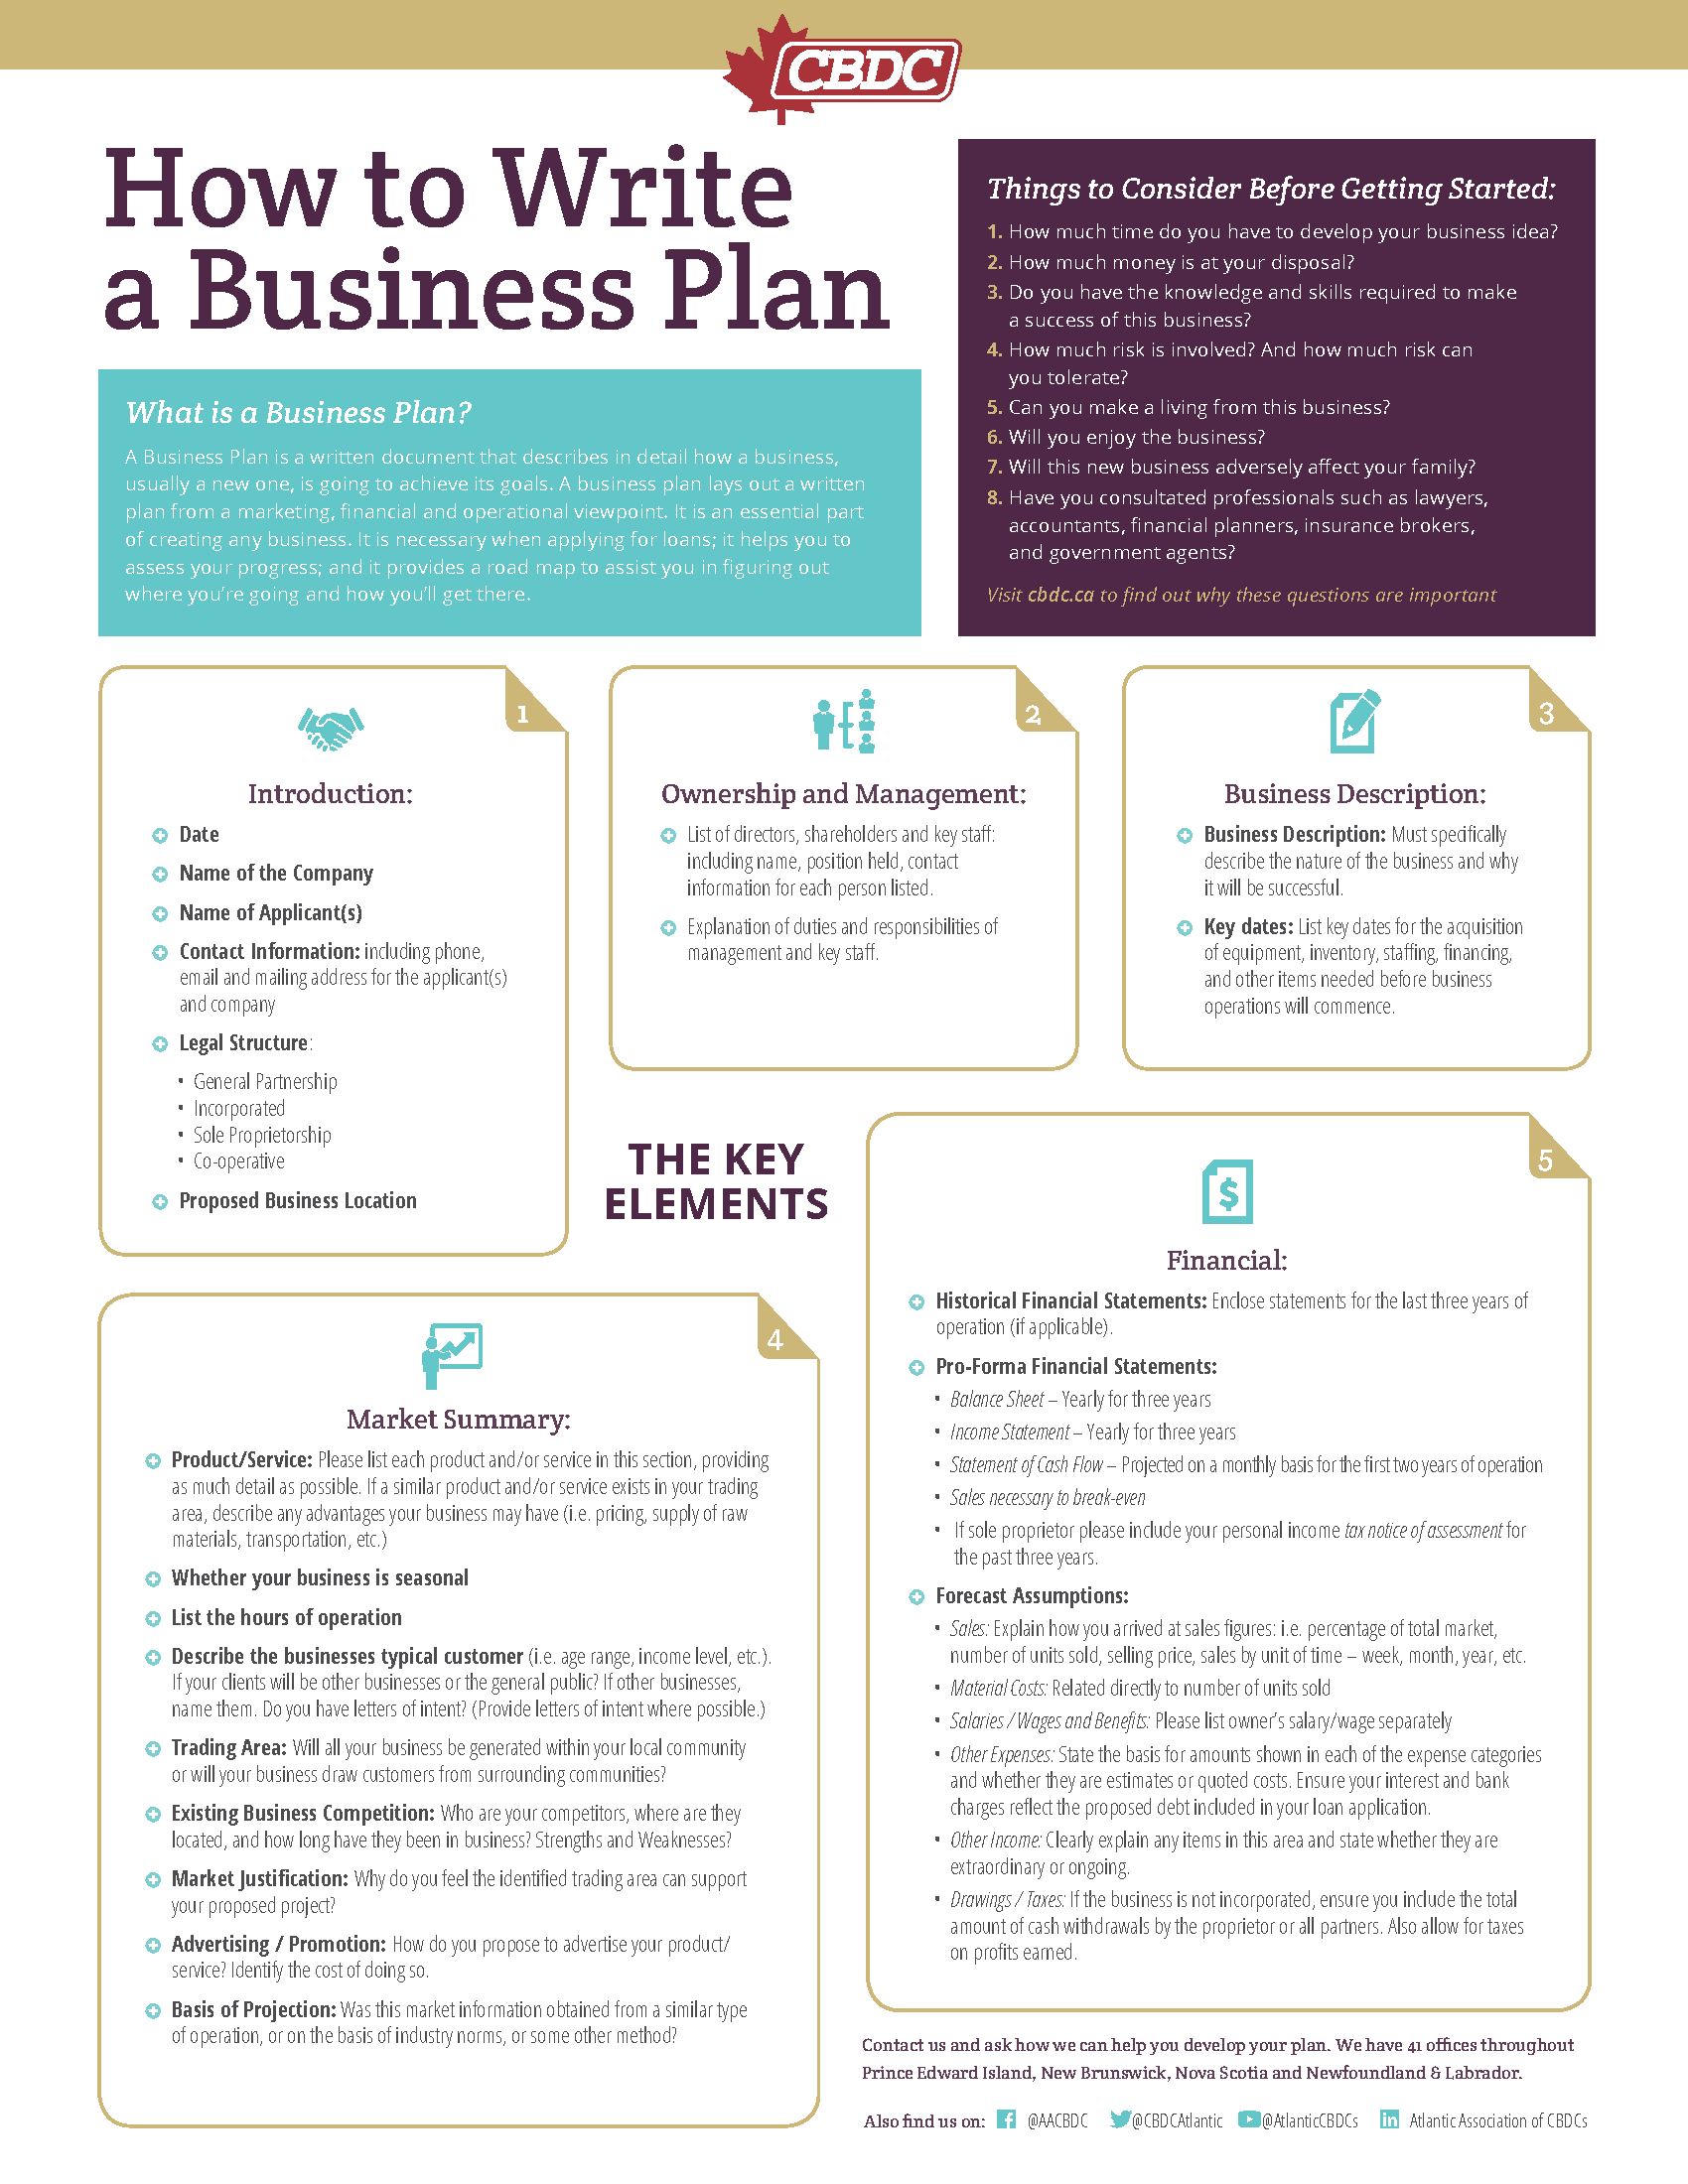 Business Plan Definition